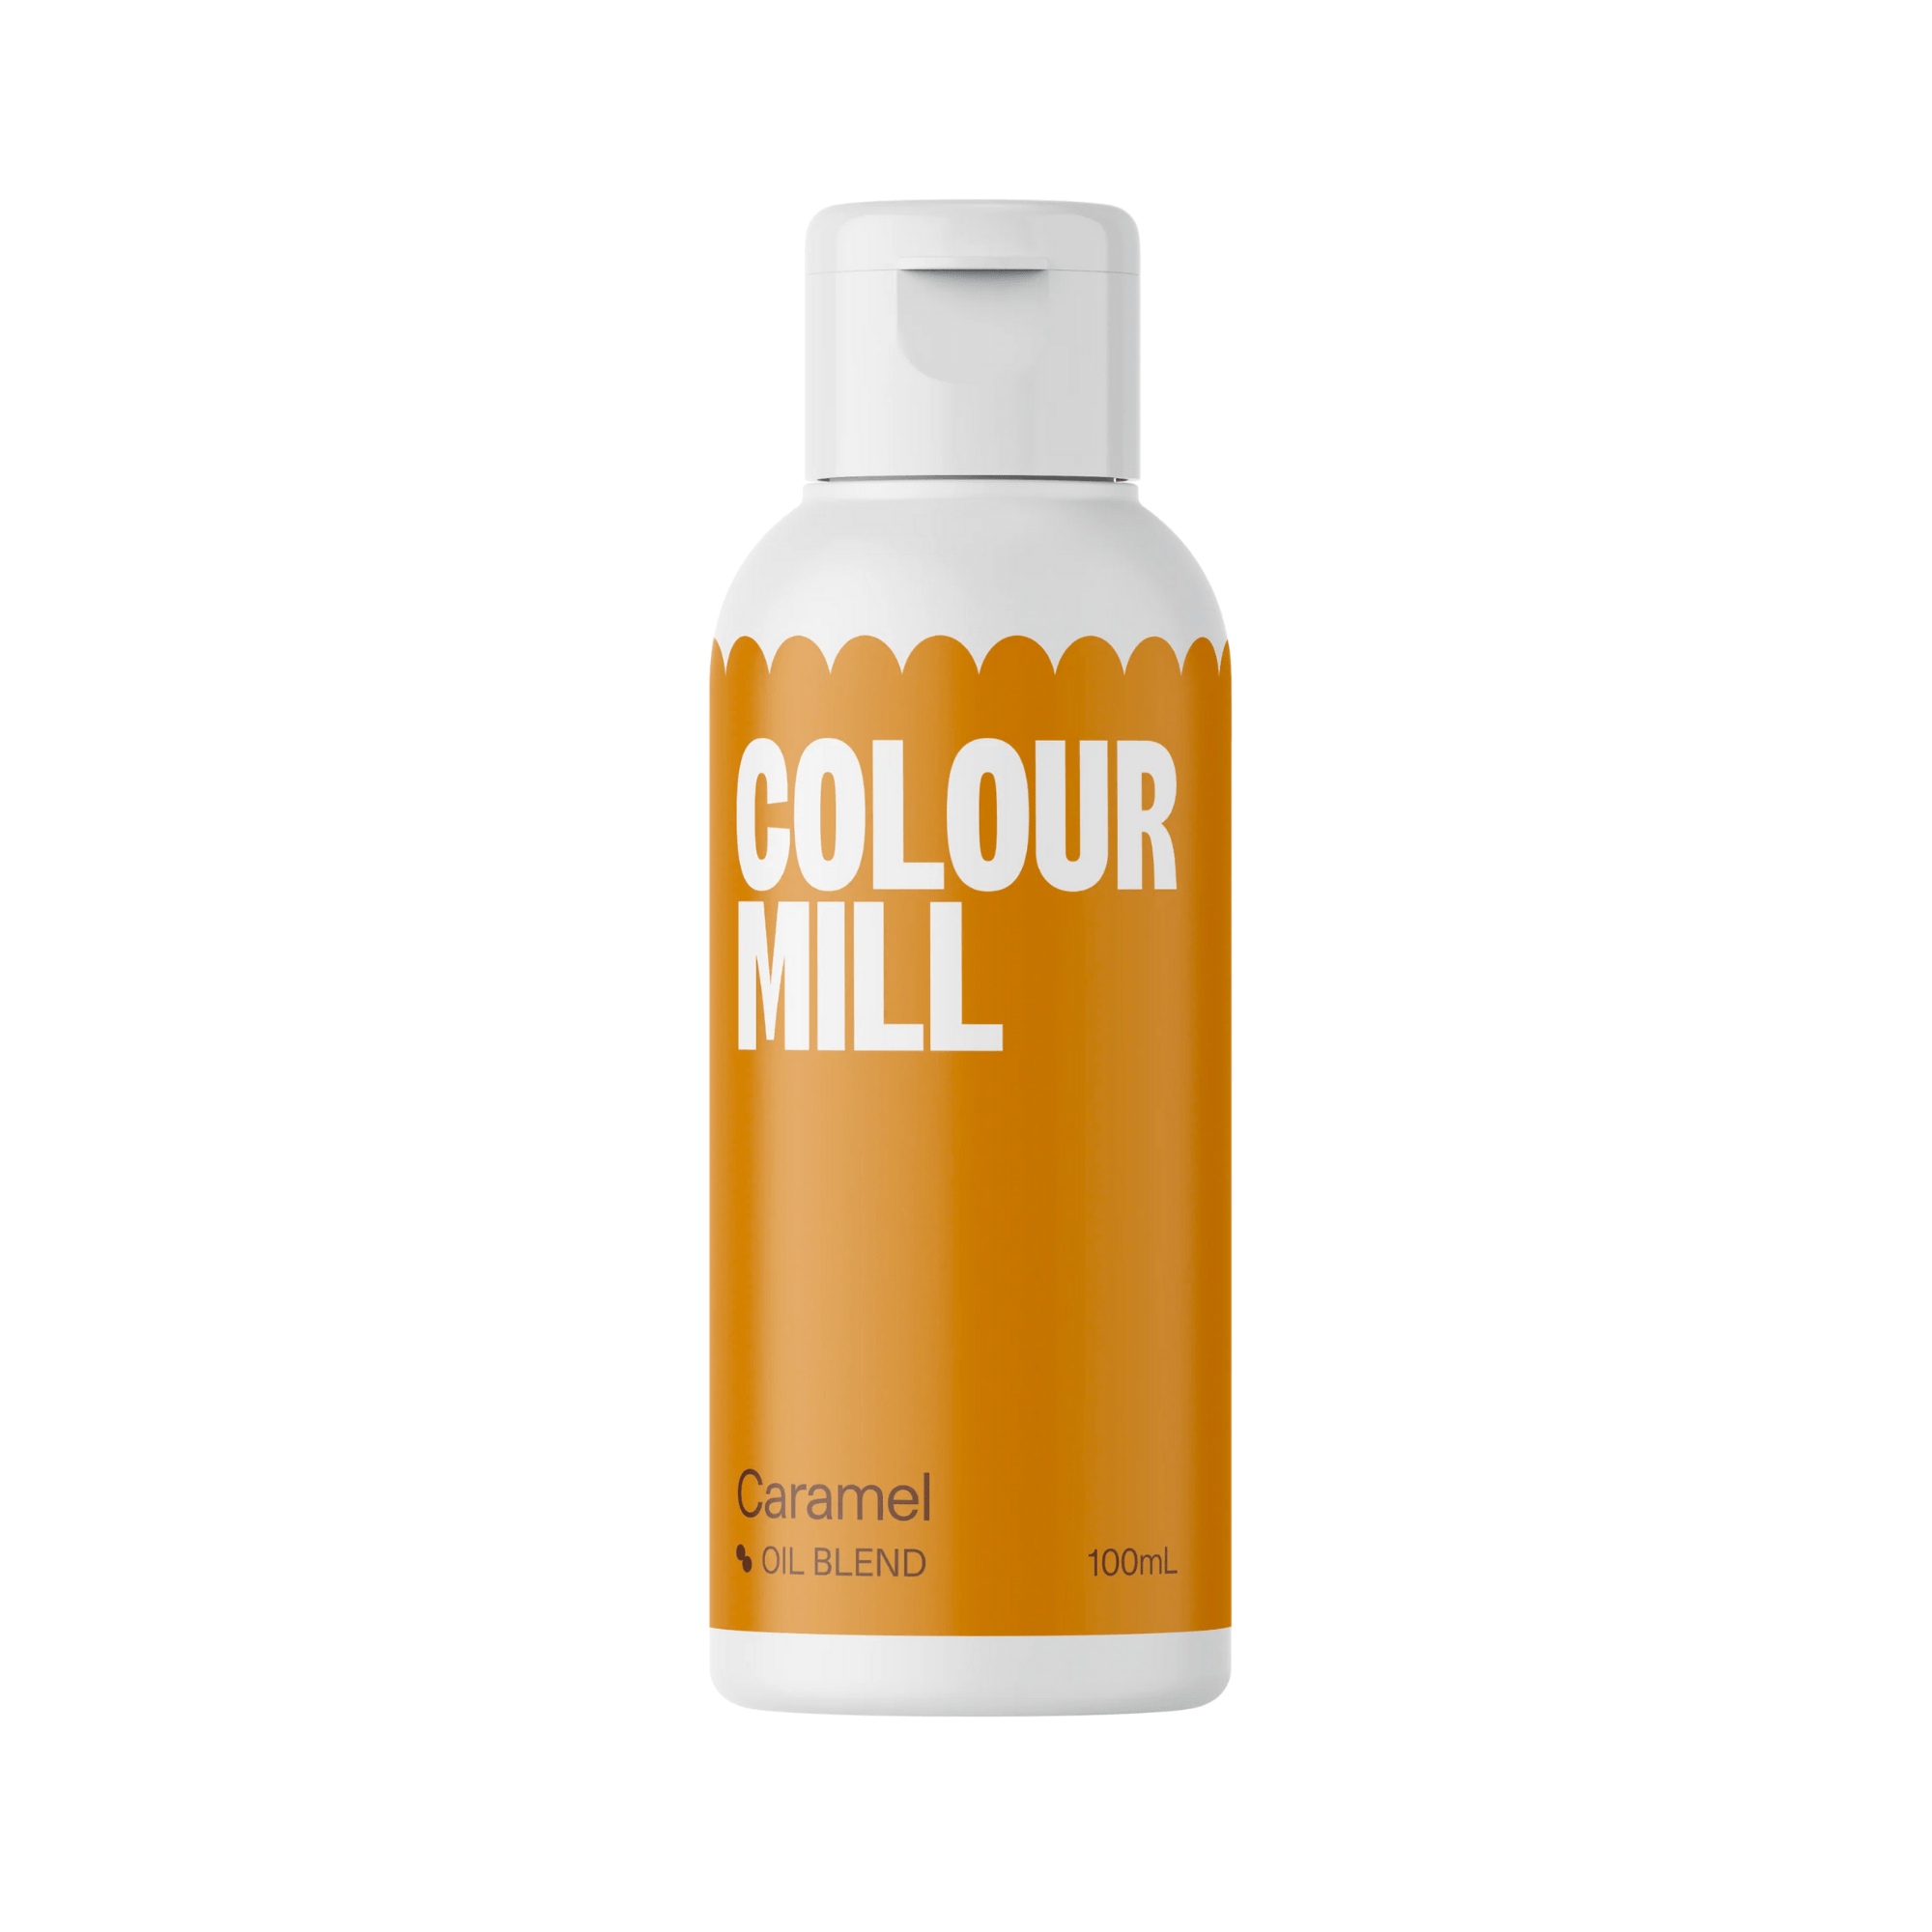 Happy Sprinkles Streusel 100ml Colour Mill Caramel - Oil Blend